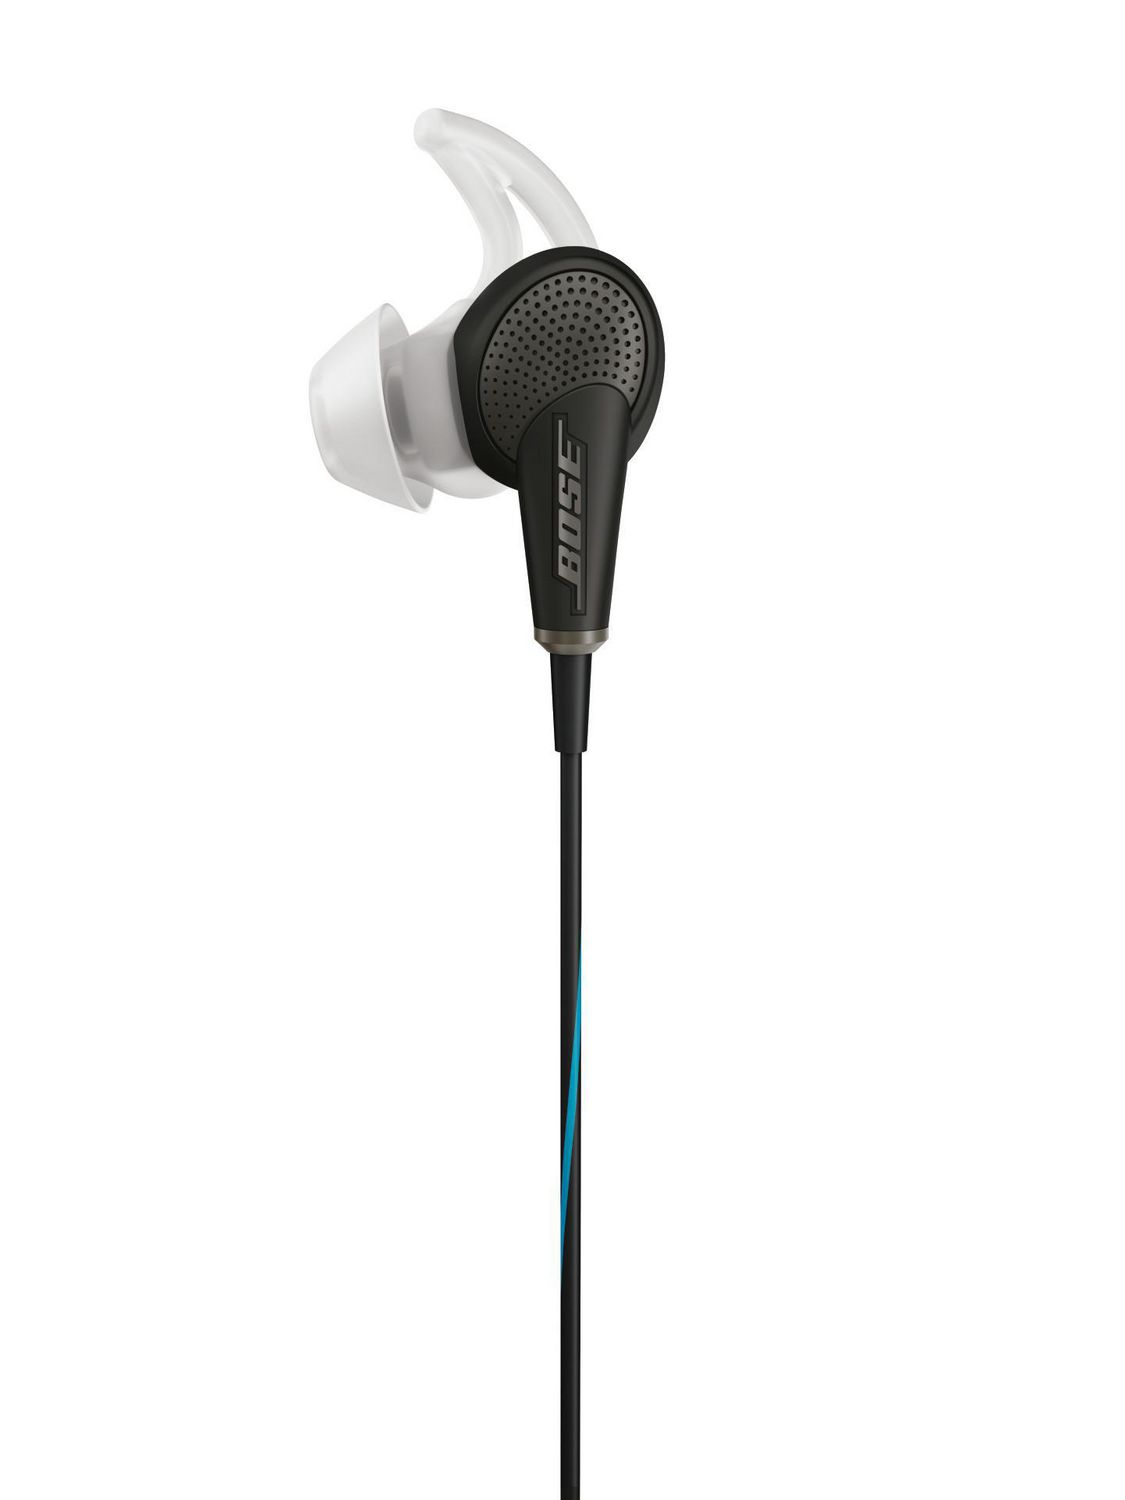 Bose QuietComfort 20 Acoustic Noise Cancelling Headphones - Samsung